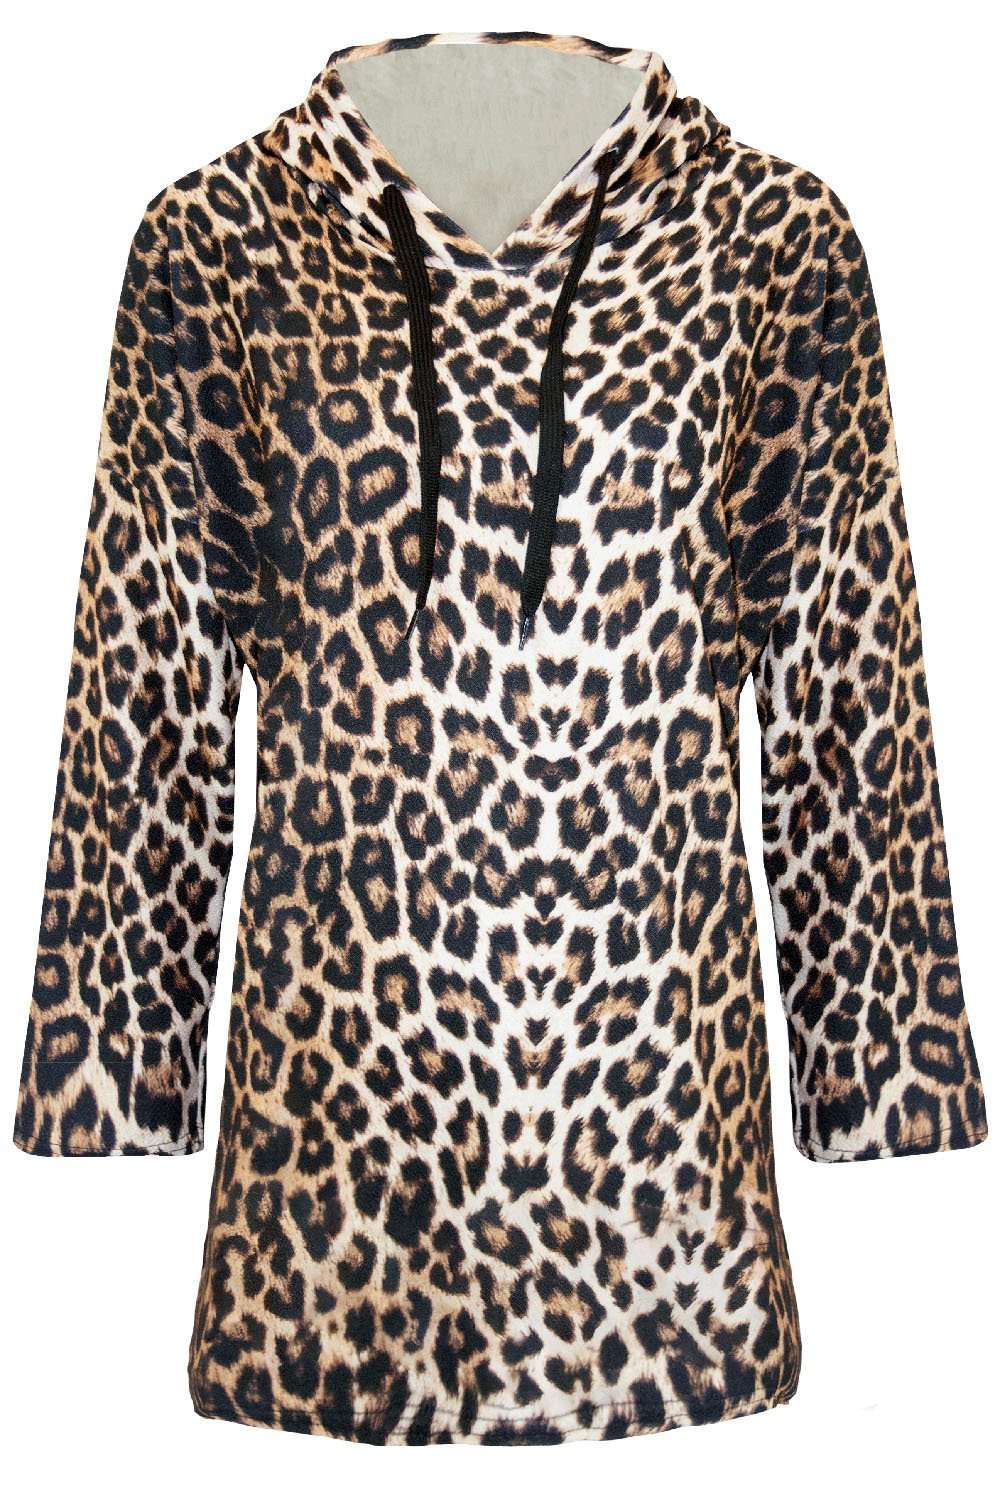 Chelsi Leopard Print Oversized Hooded Sweatshirt - bejealous-com